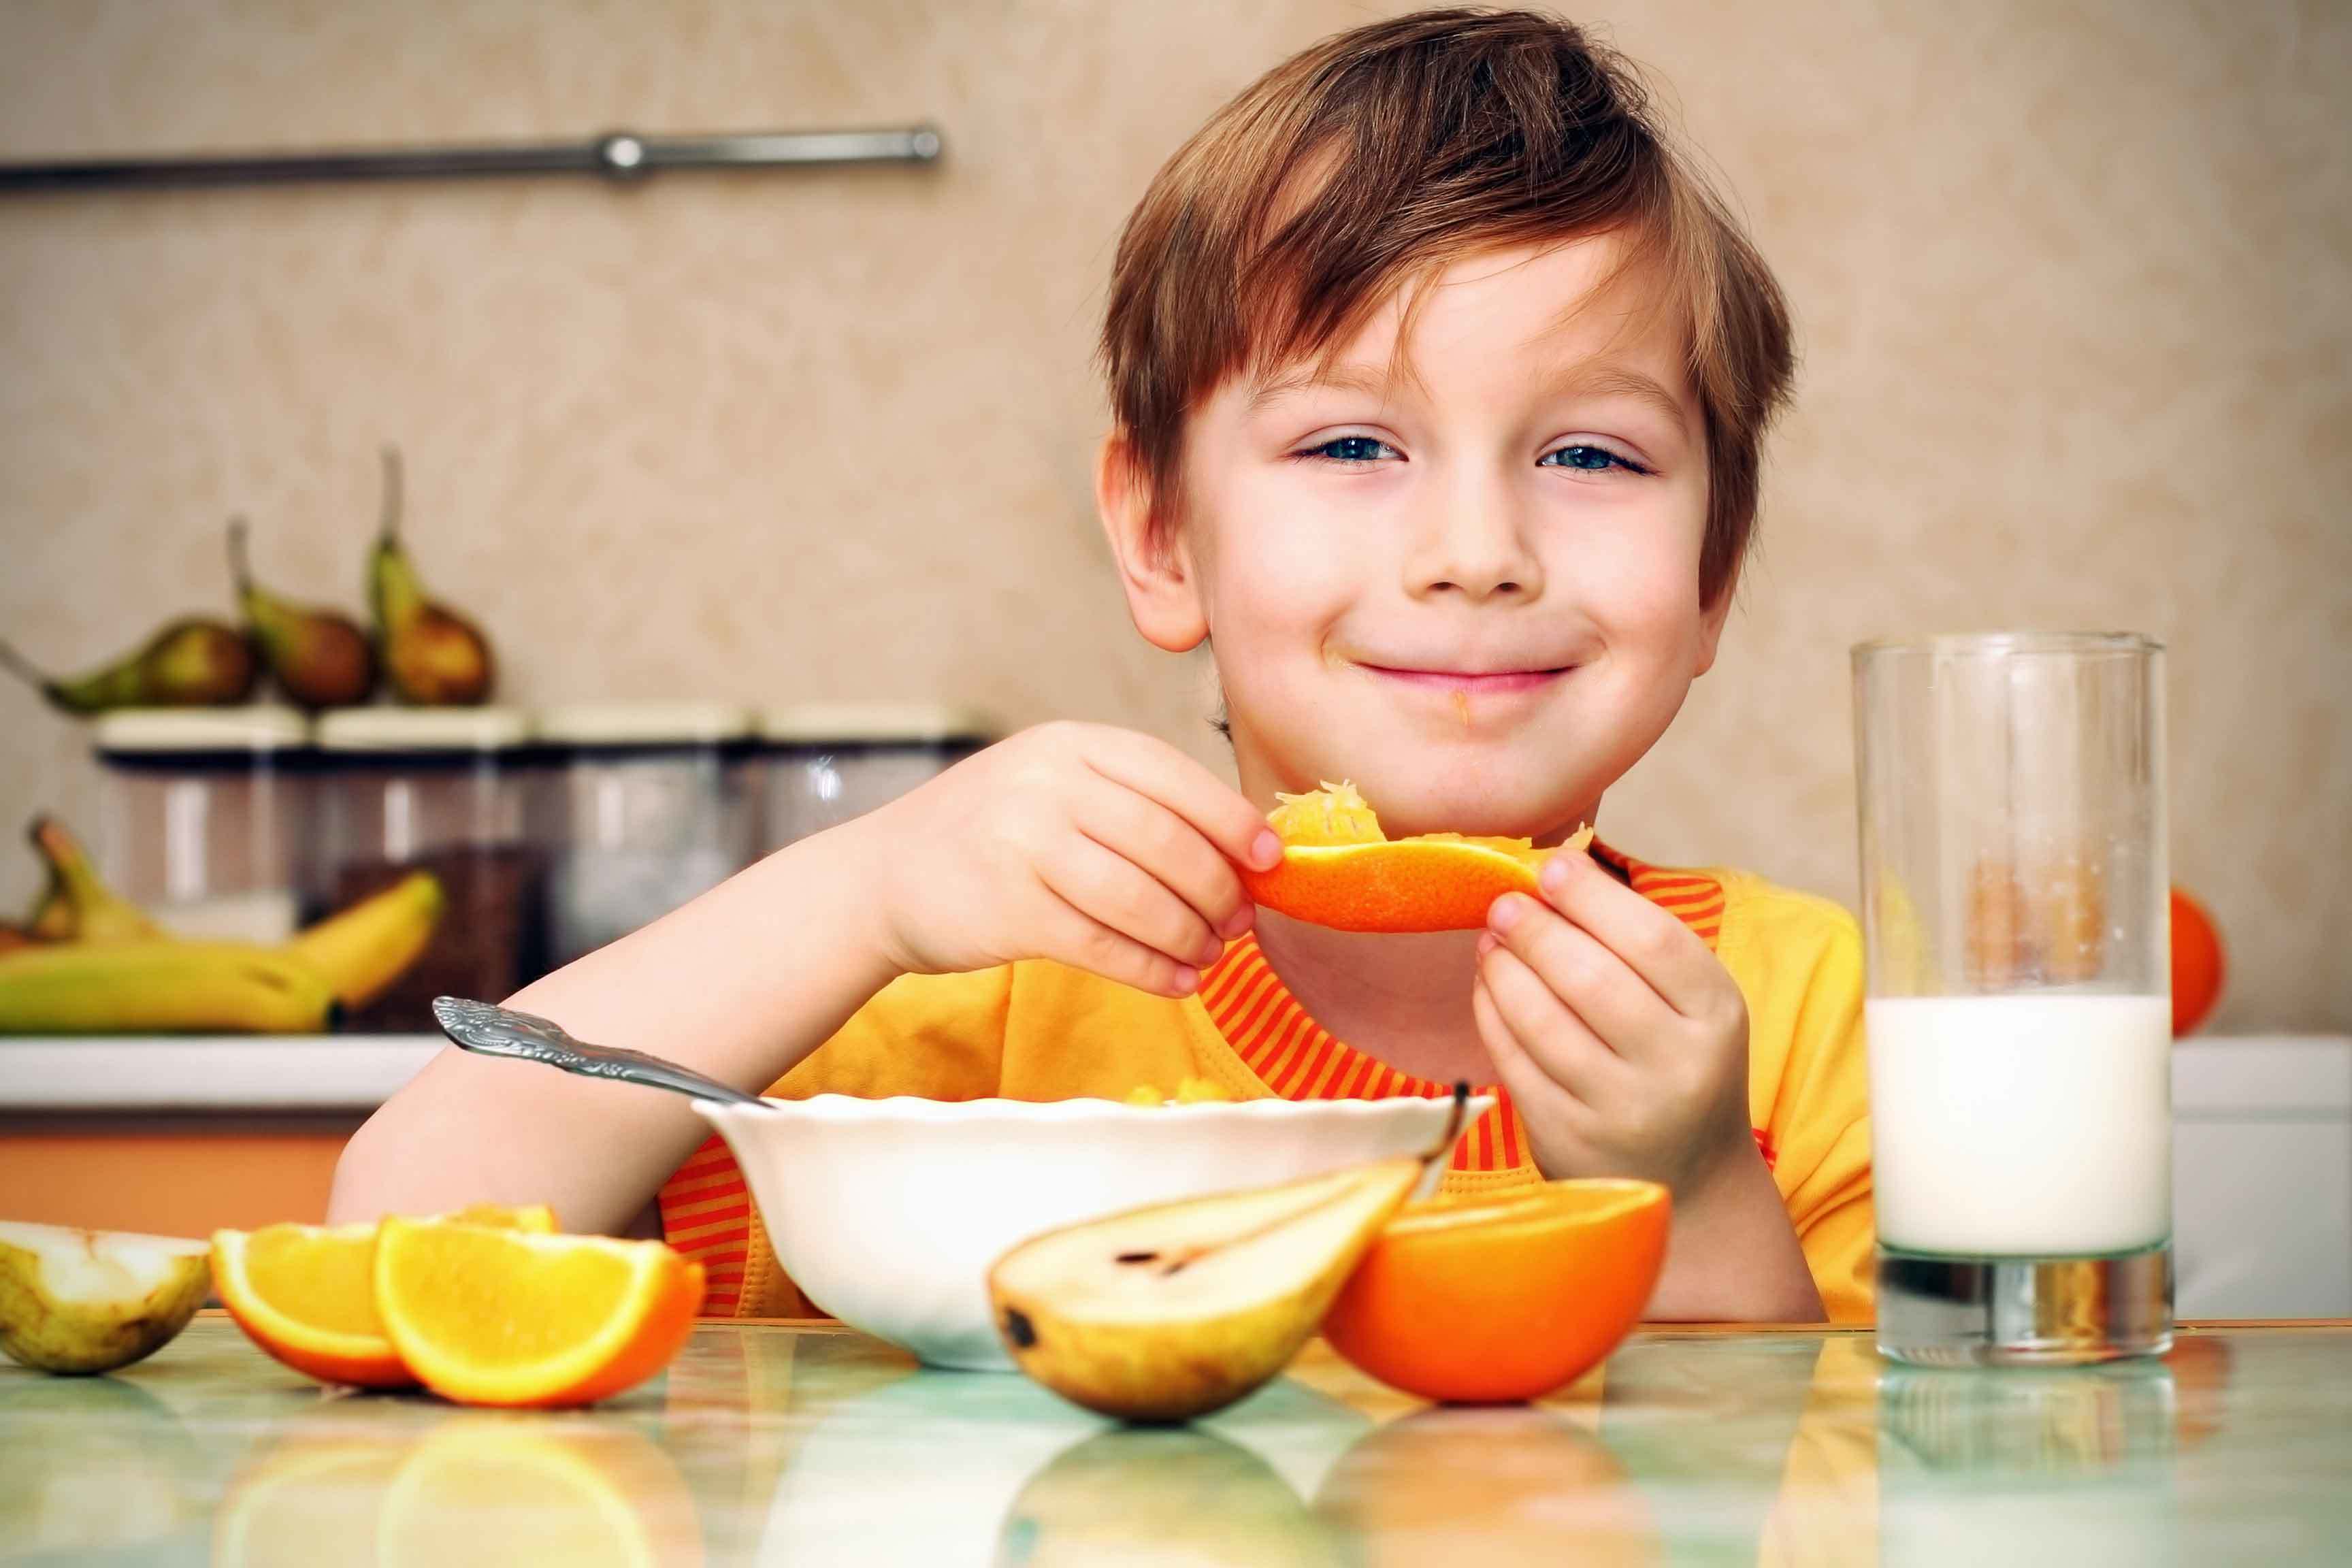 ishrana dece, Zdravlje i prevencija, dijeta i nutricionizam, magazin